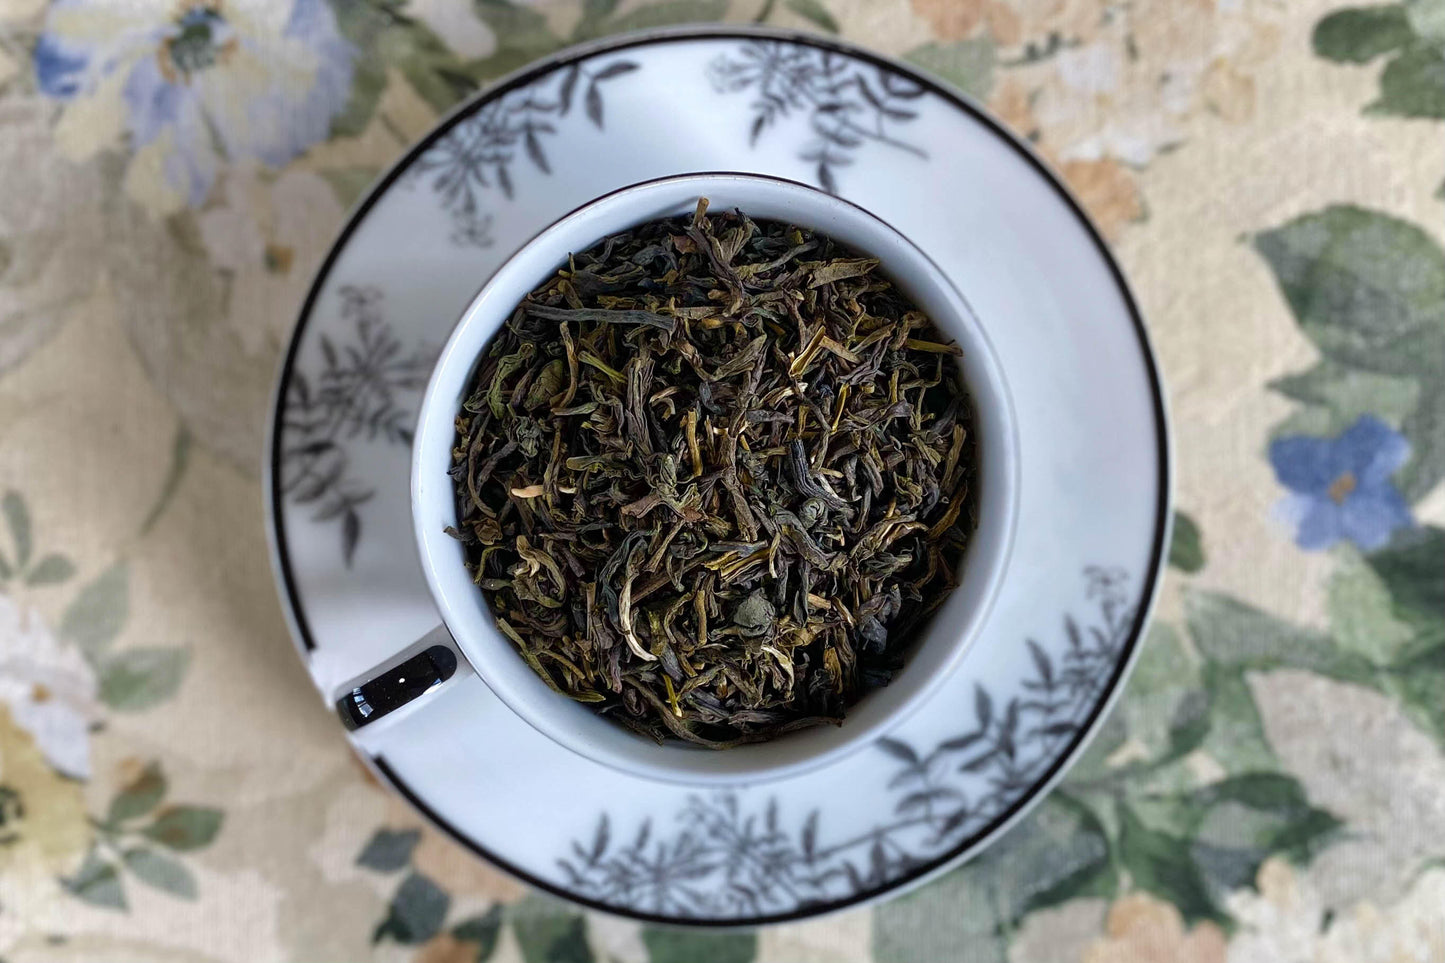 teacup full of green tea